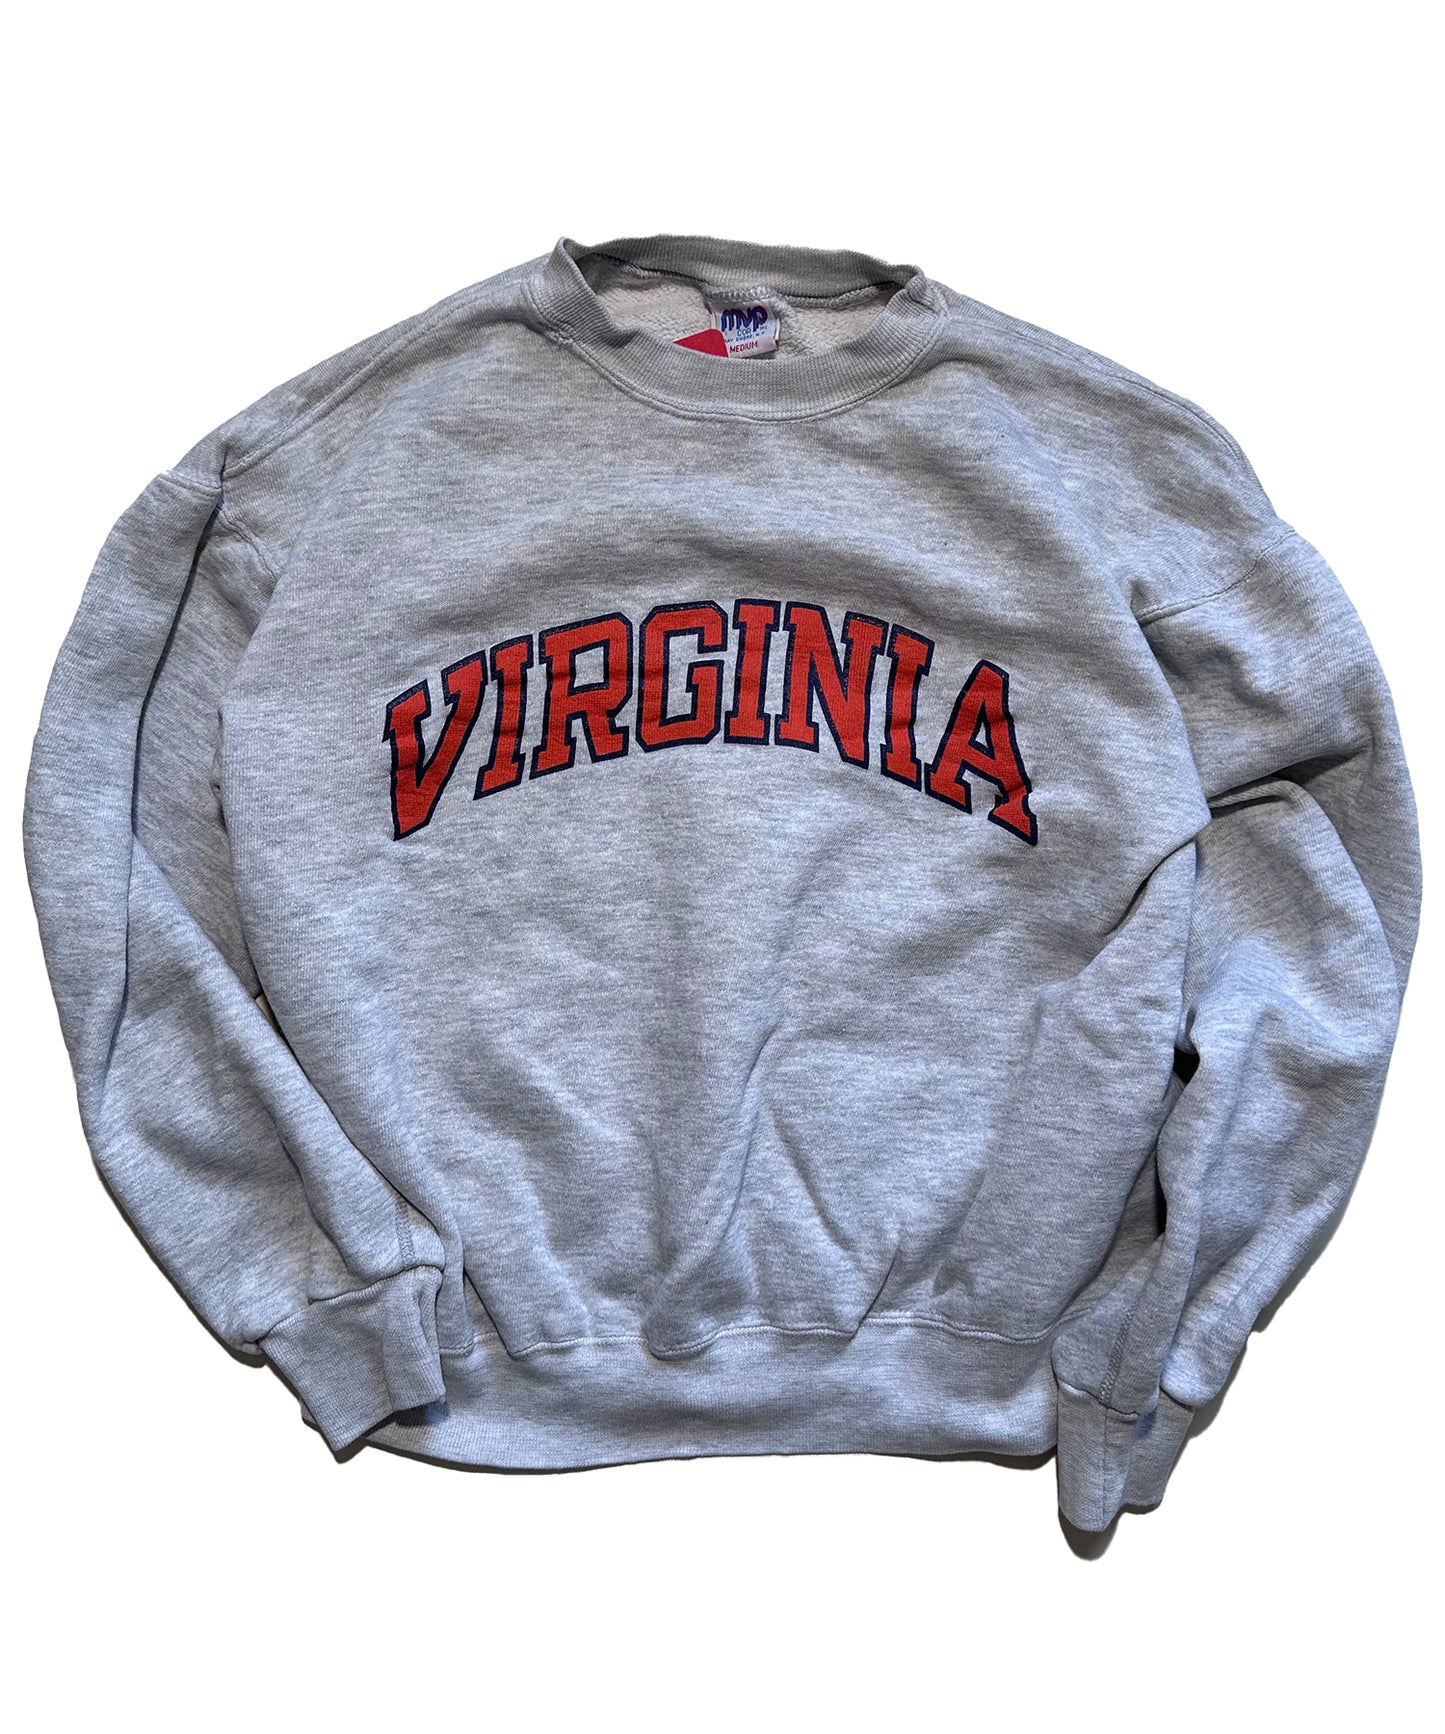 Vintage Virginia Sweater (Small)